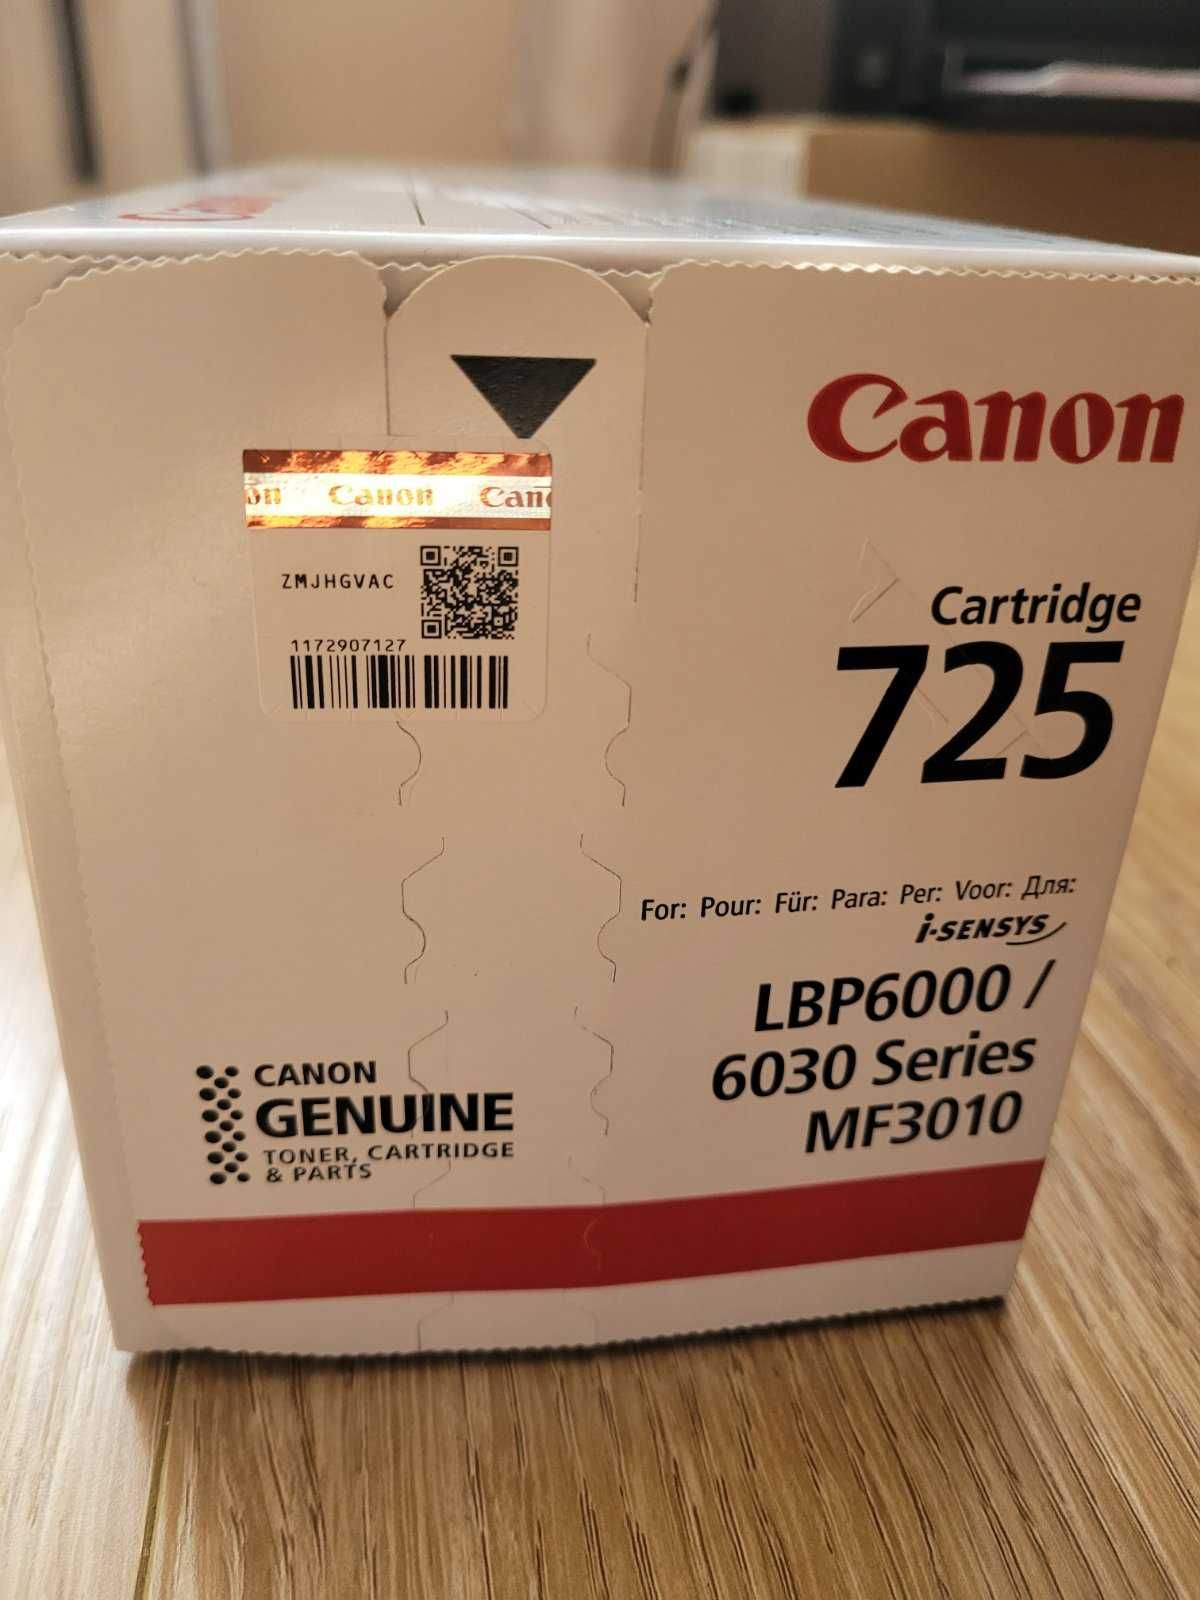 CANON Cartridge 725
 LBP: 6000, 6030 Series
CANON I-SENSYS MF: 3010